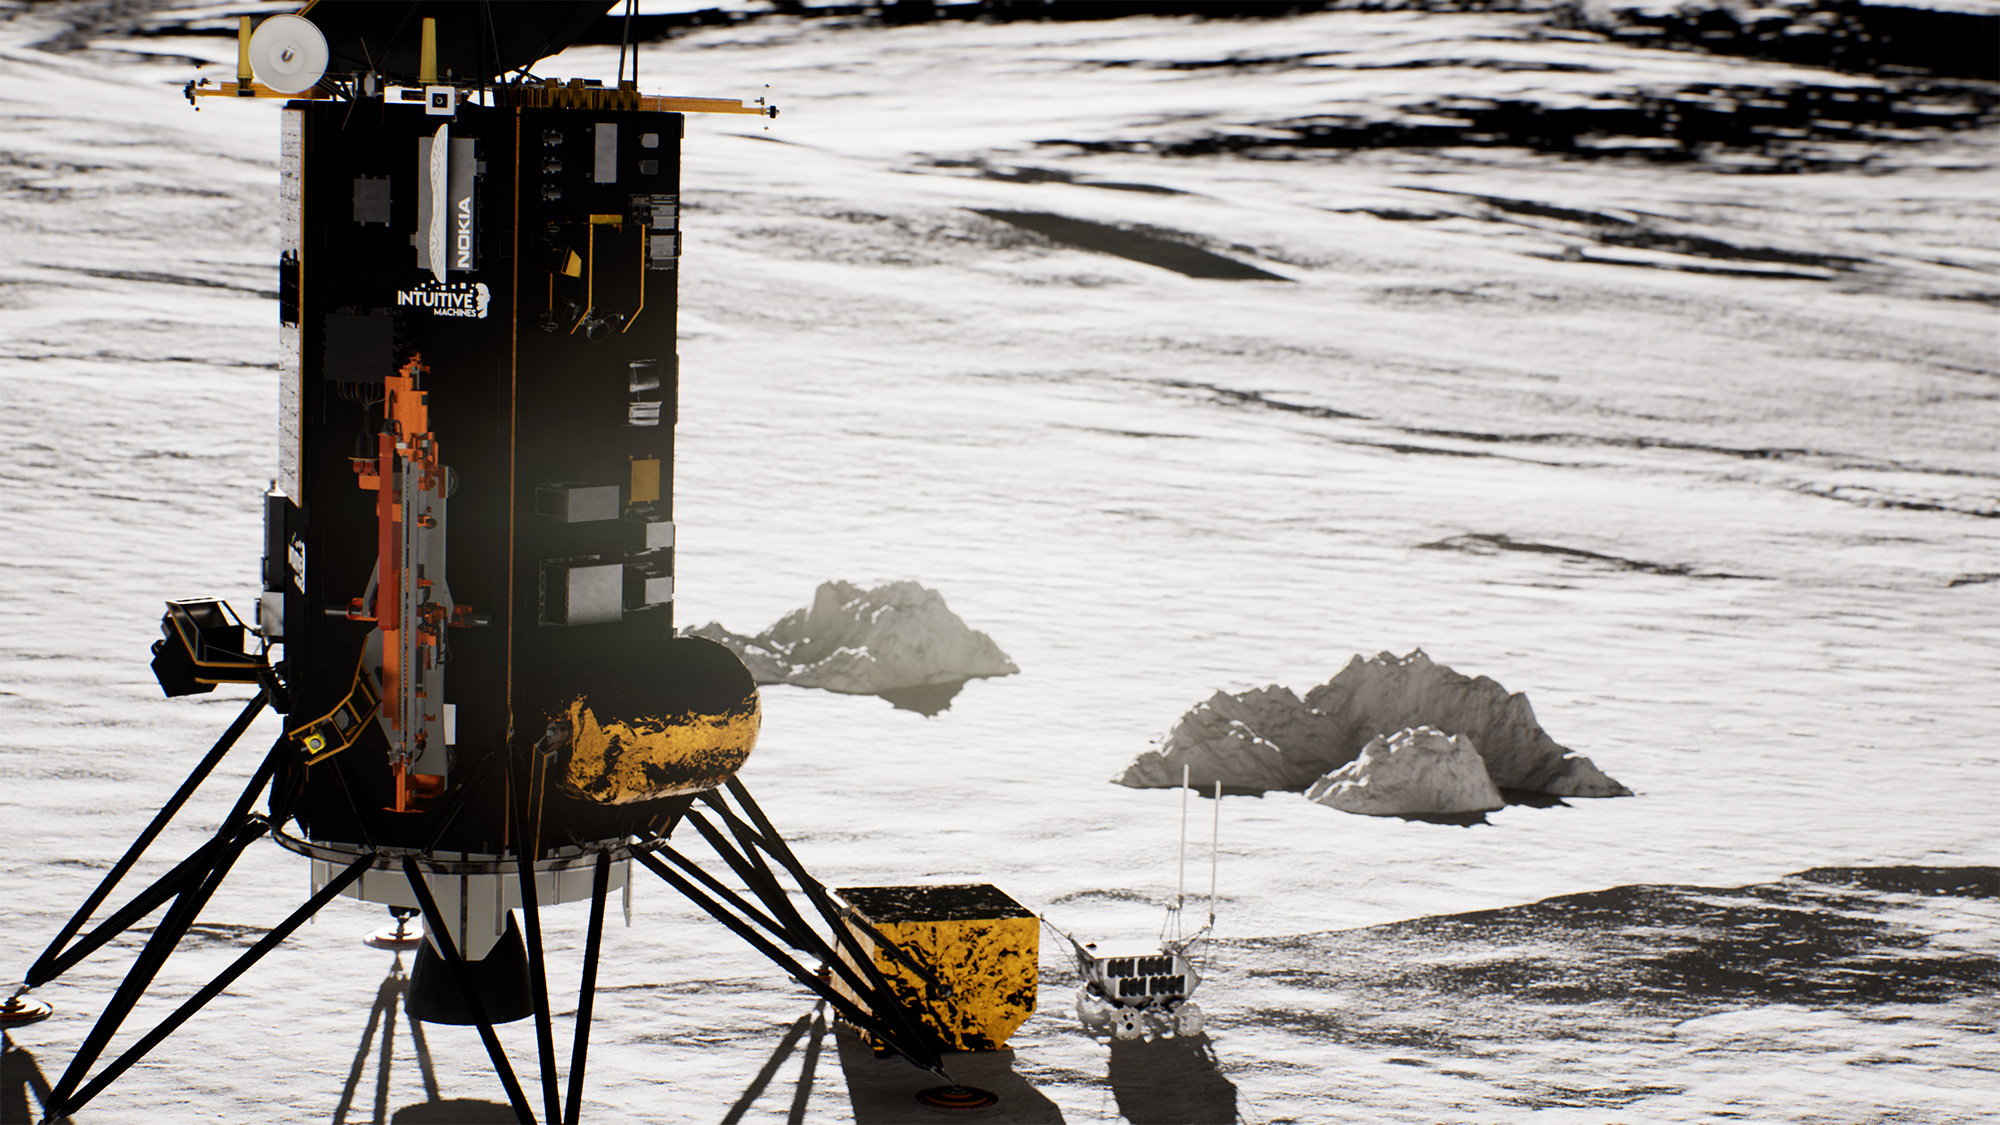 A rendering shows Intuitive Machines IM-1 Nova-C lunar lander on the rocky moon landscape. 